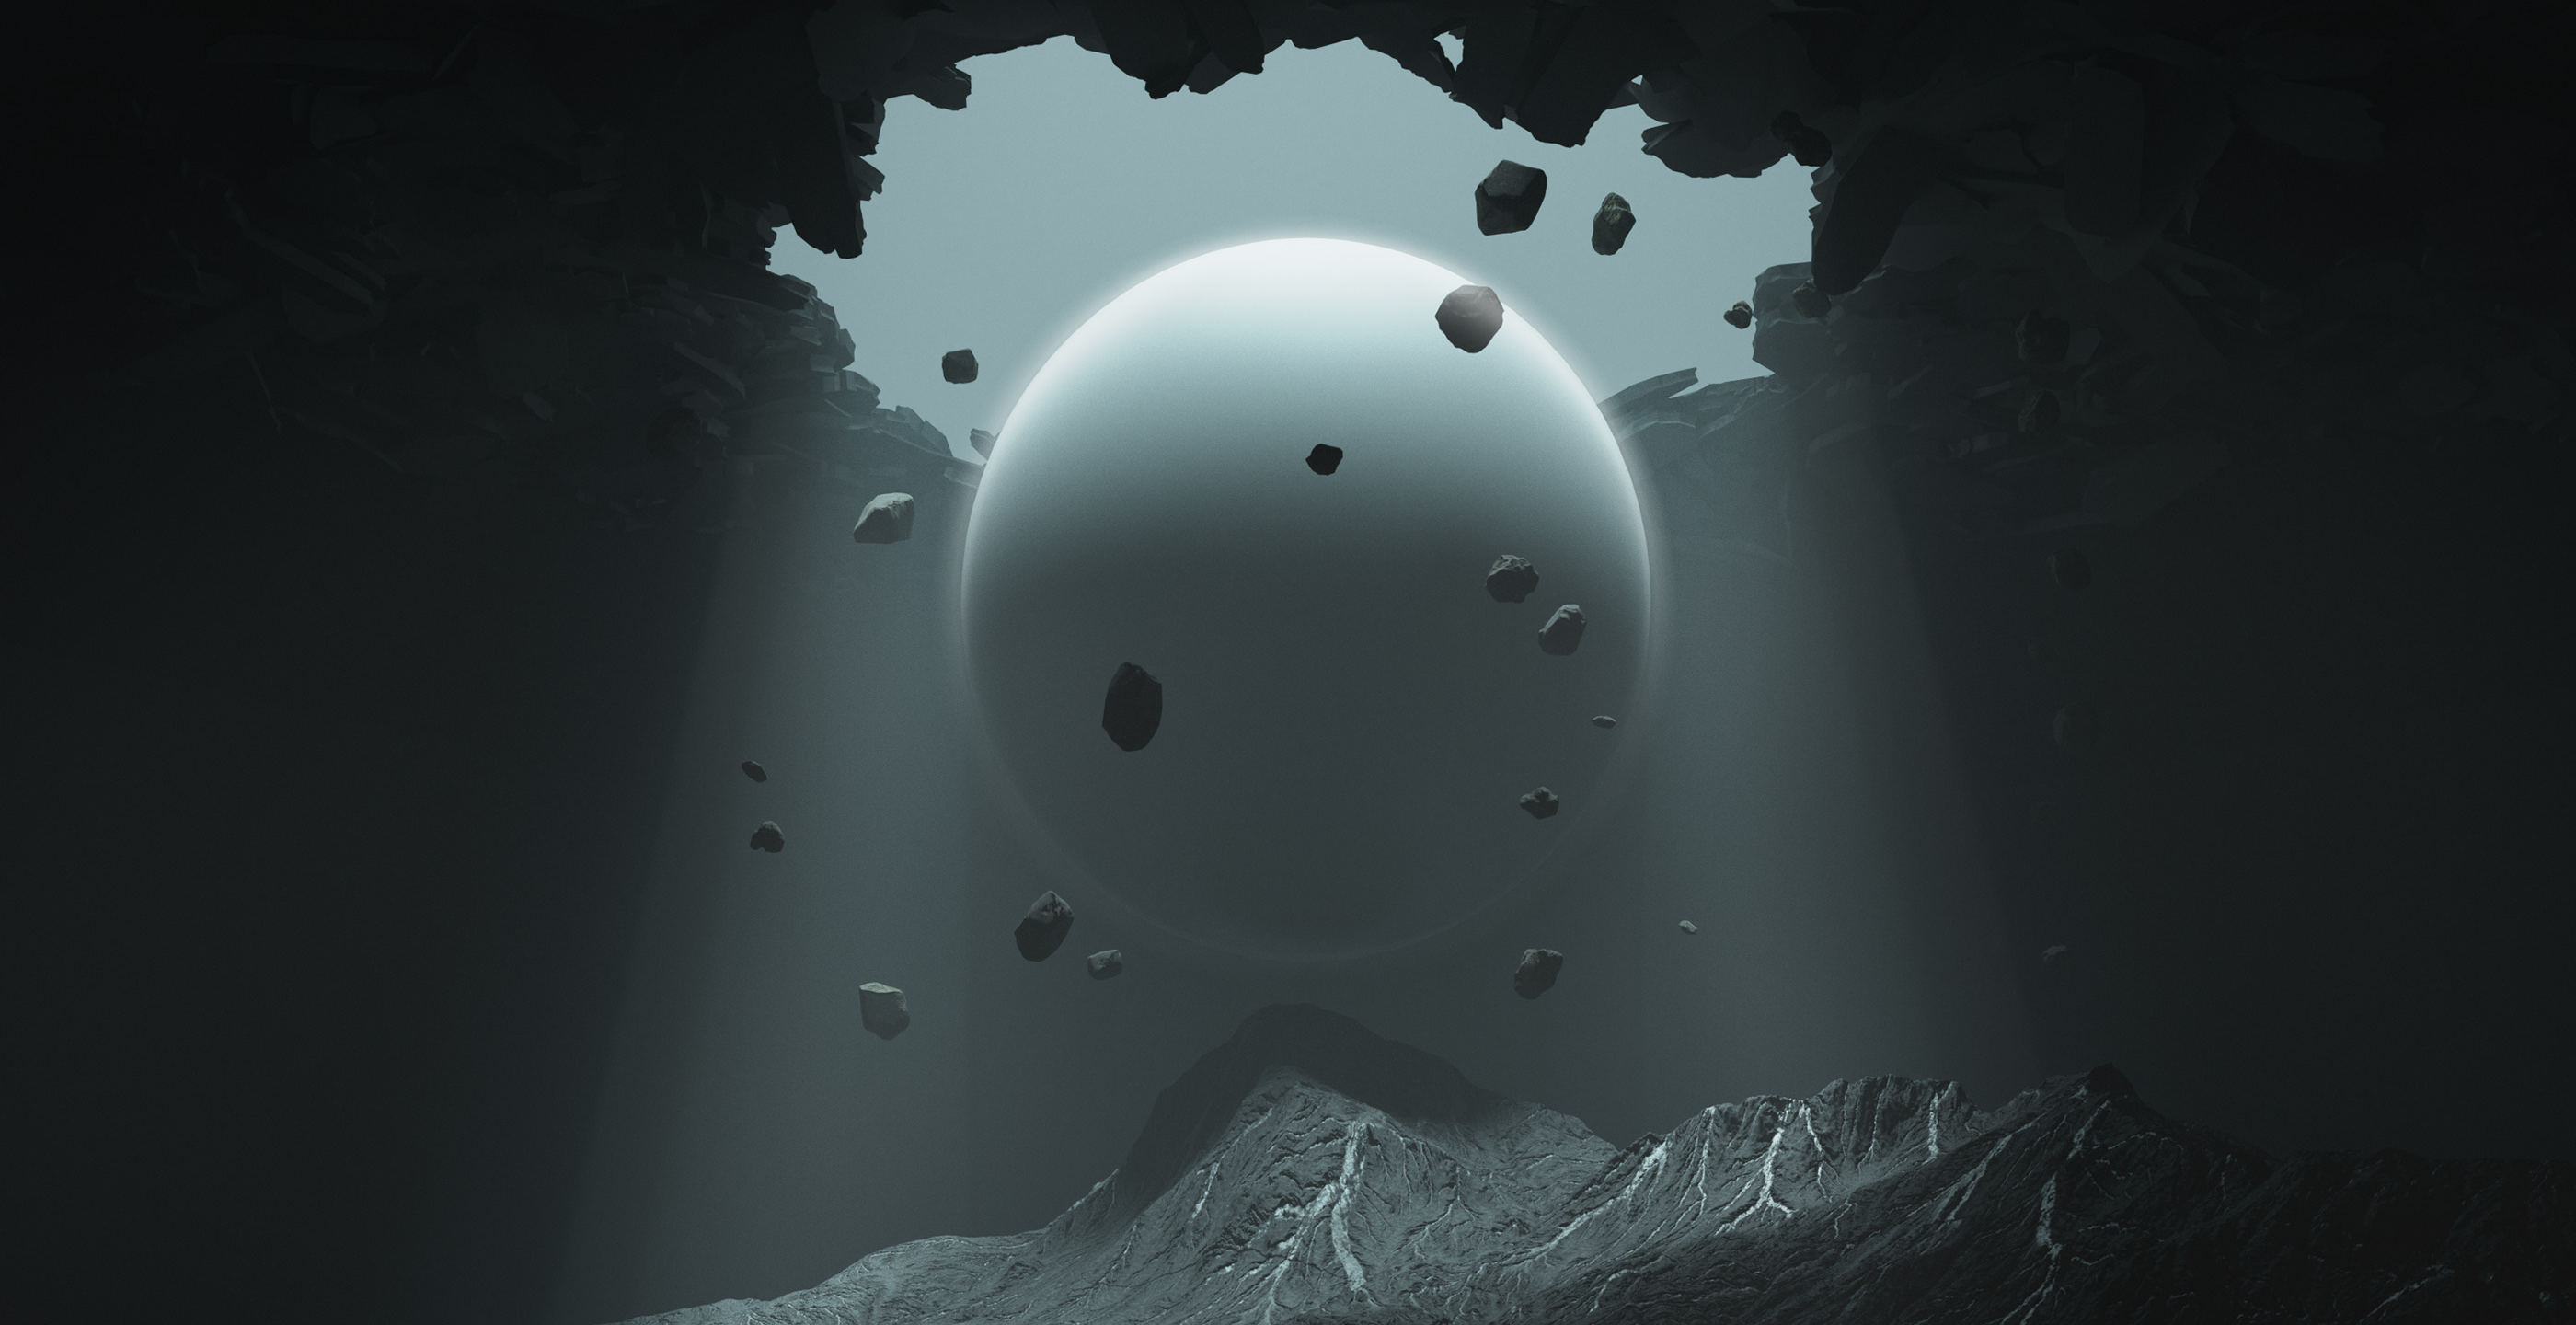 General 2800x1440 digital art artwork illustration CGI abstract cave destruction ball